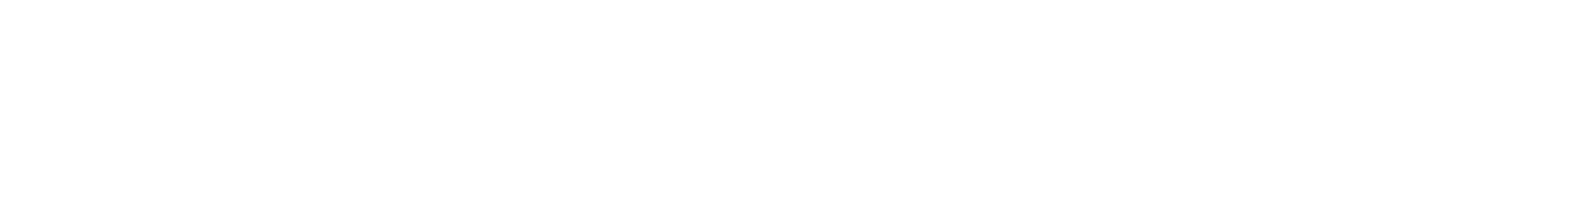 Midwest Holding logo large for dark backgrounds (transparent PNG)